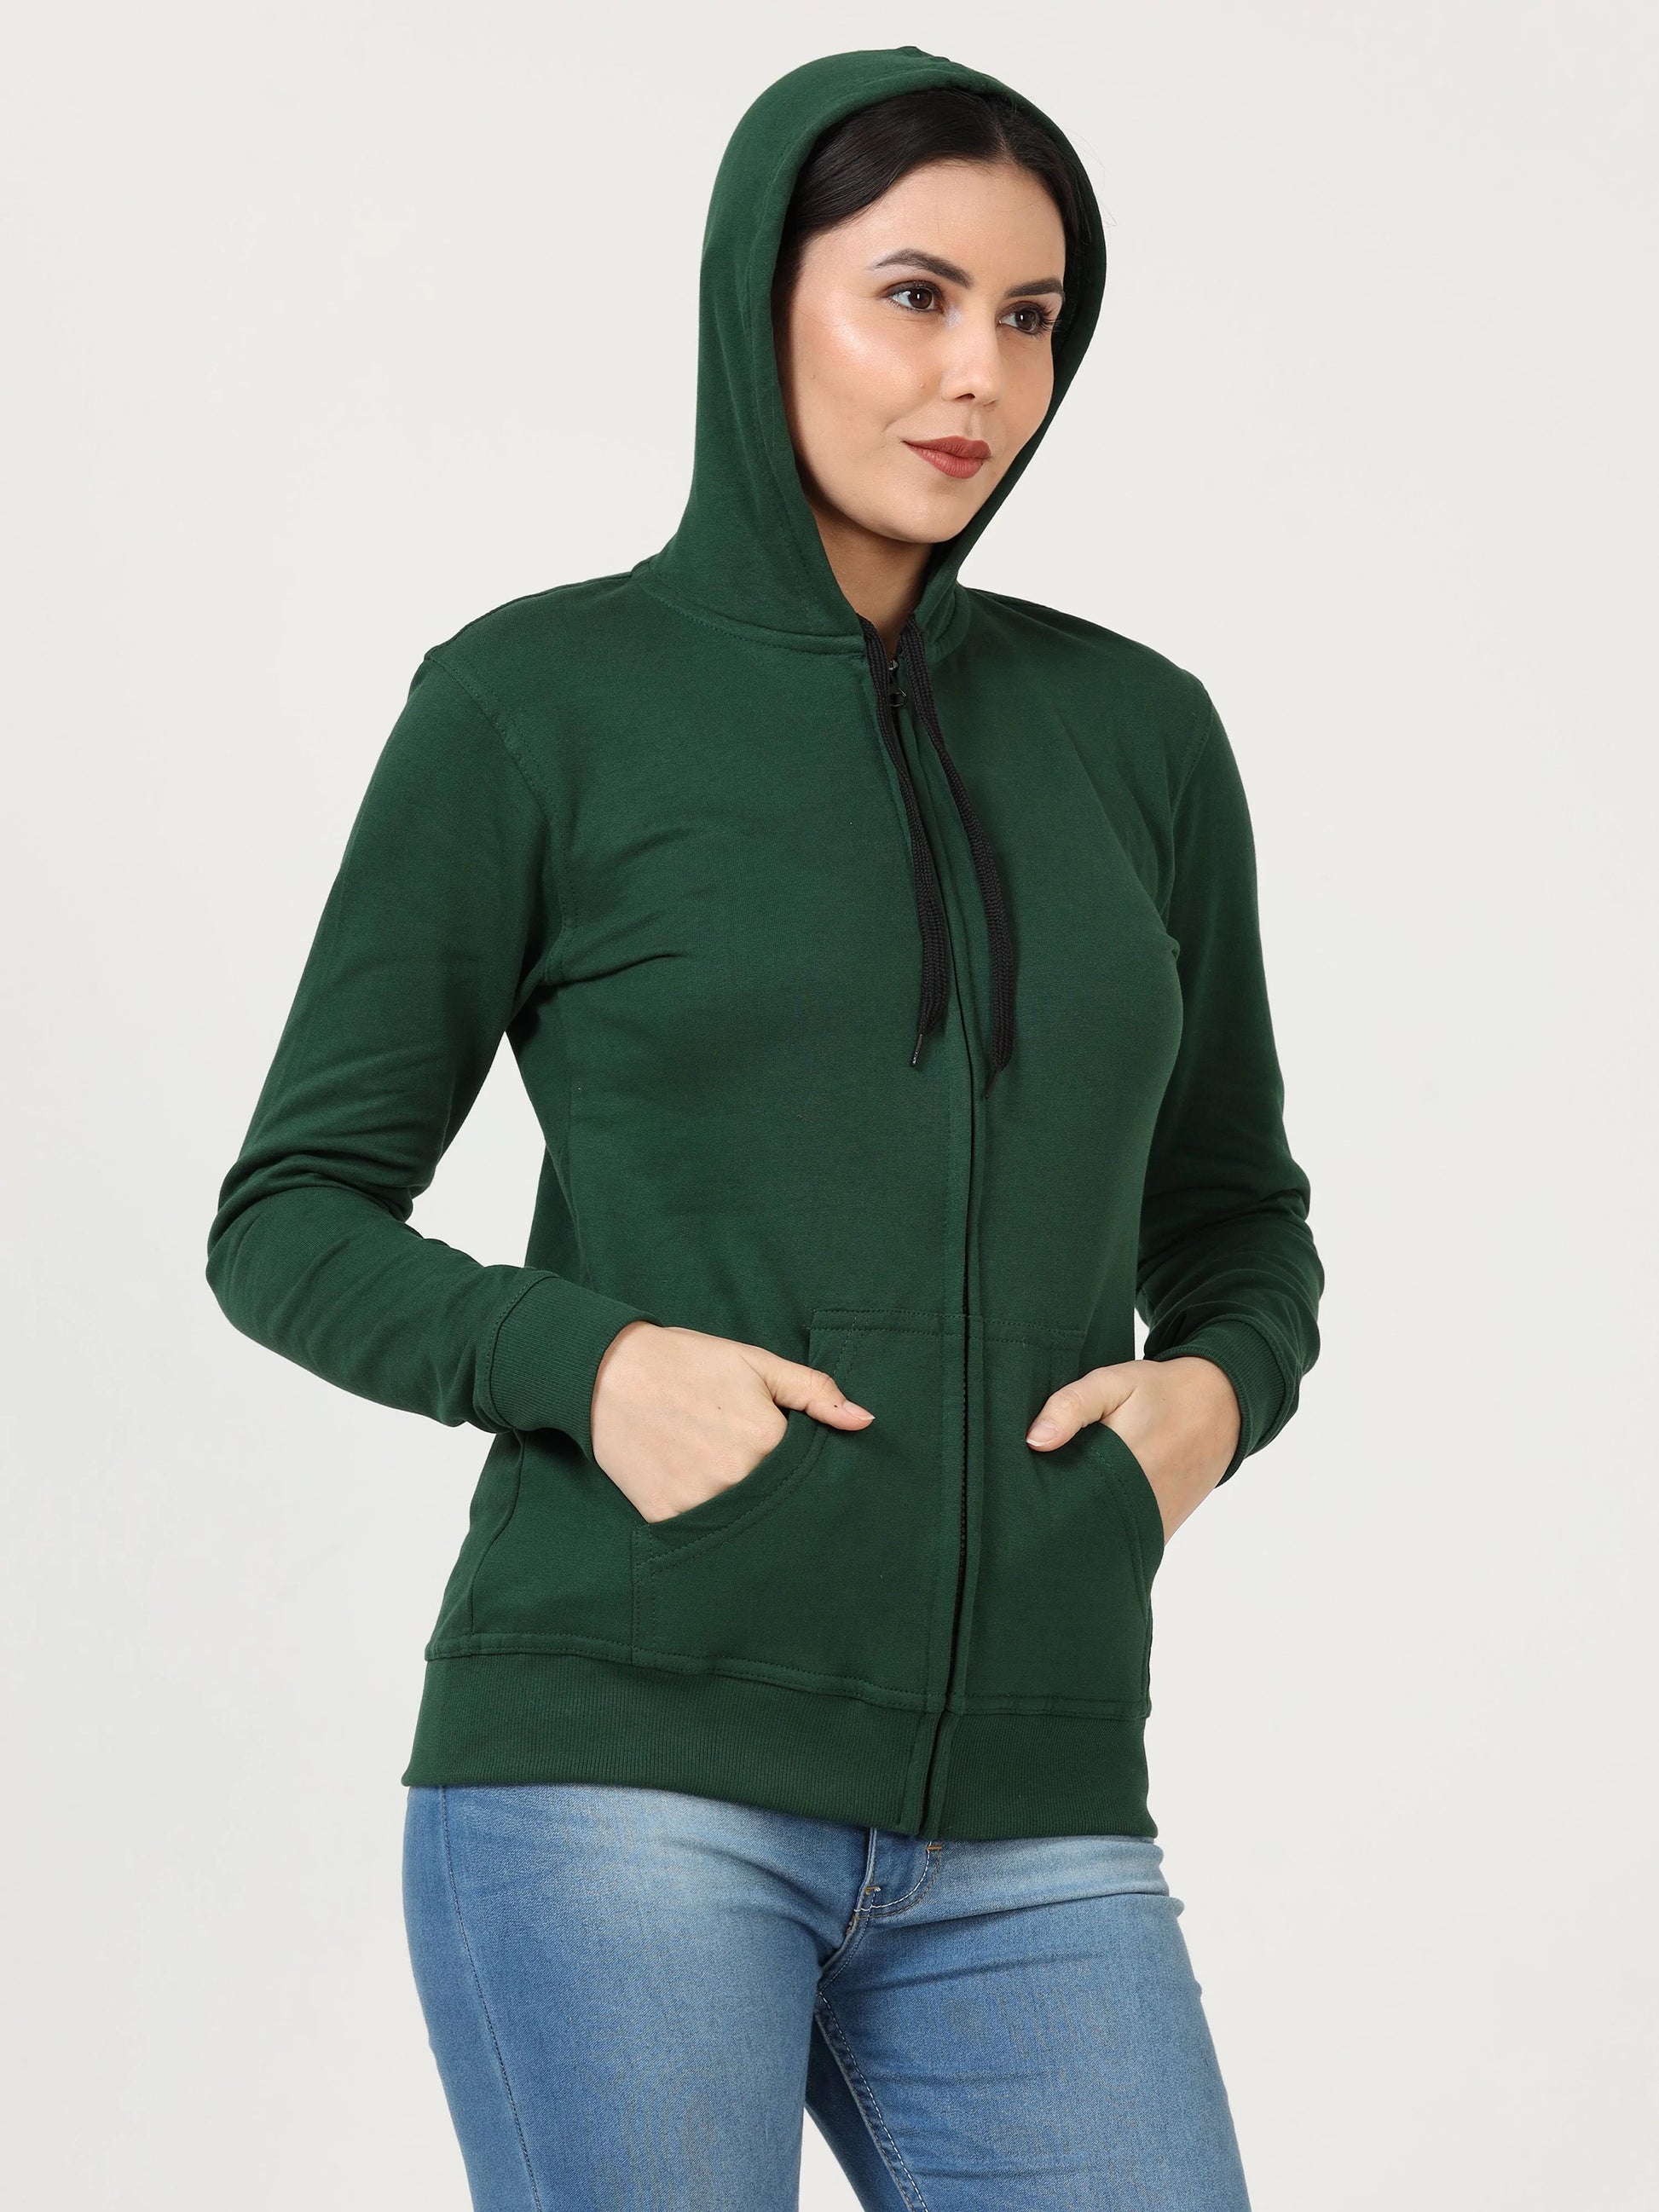 Fleximaa Women's Cotton Plain Full Sleeve Hoodies/Sweatshirt - fleximaa-so